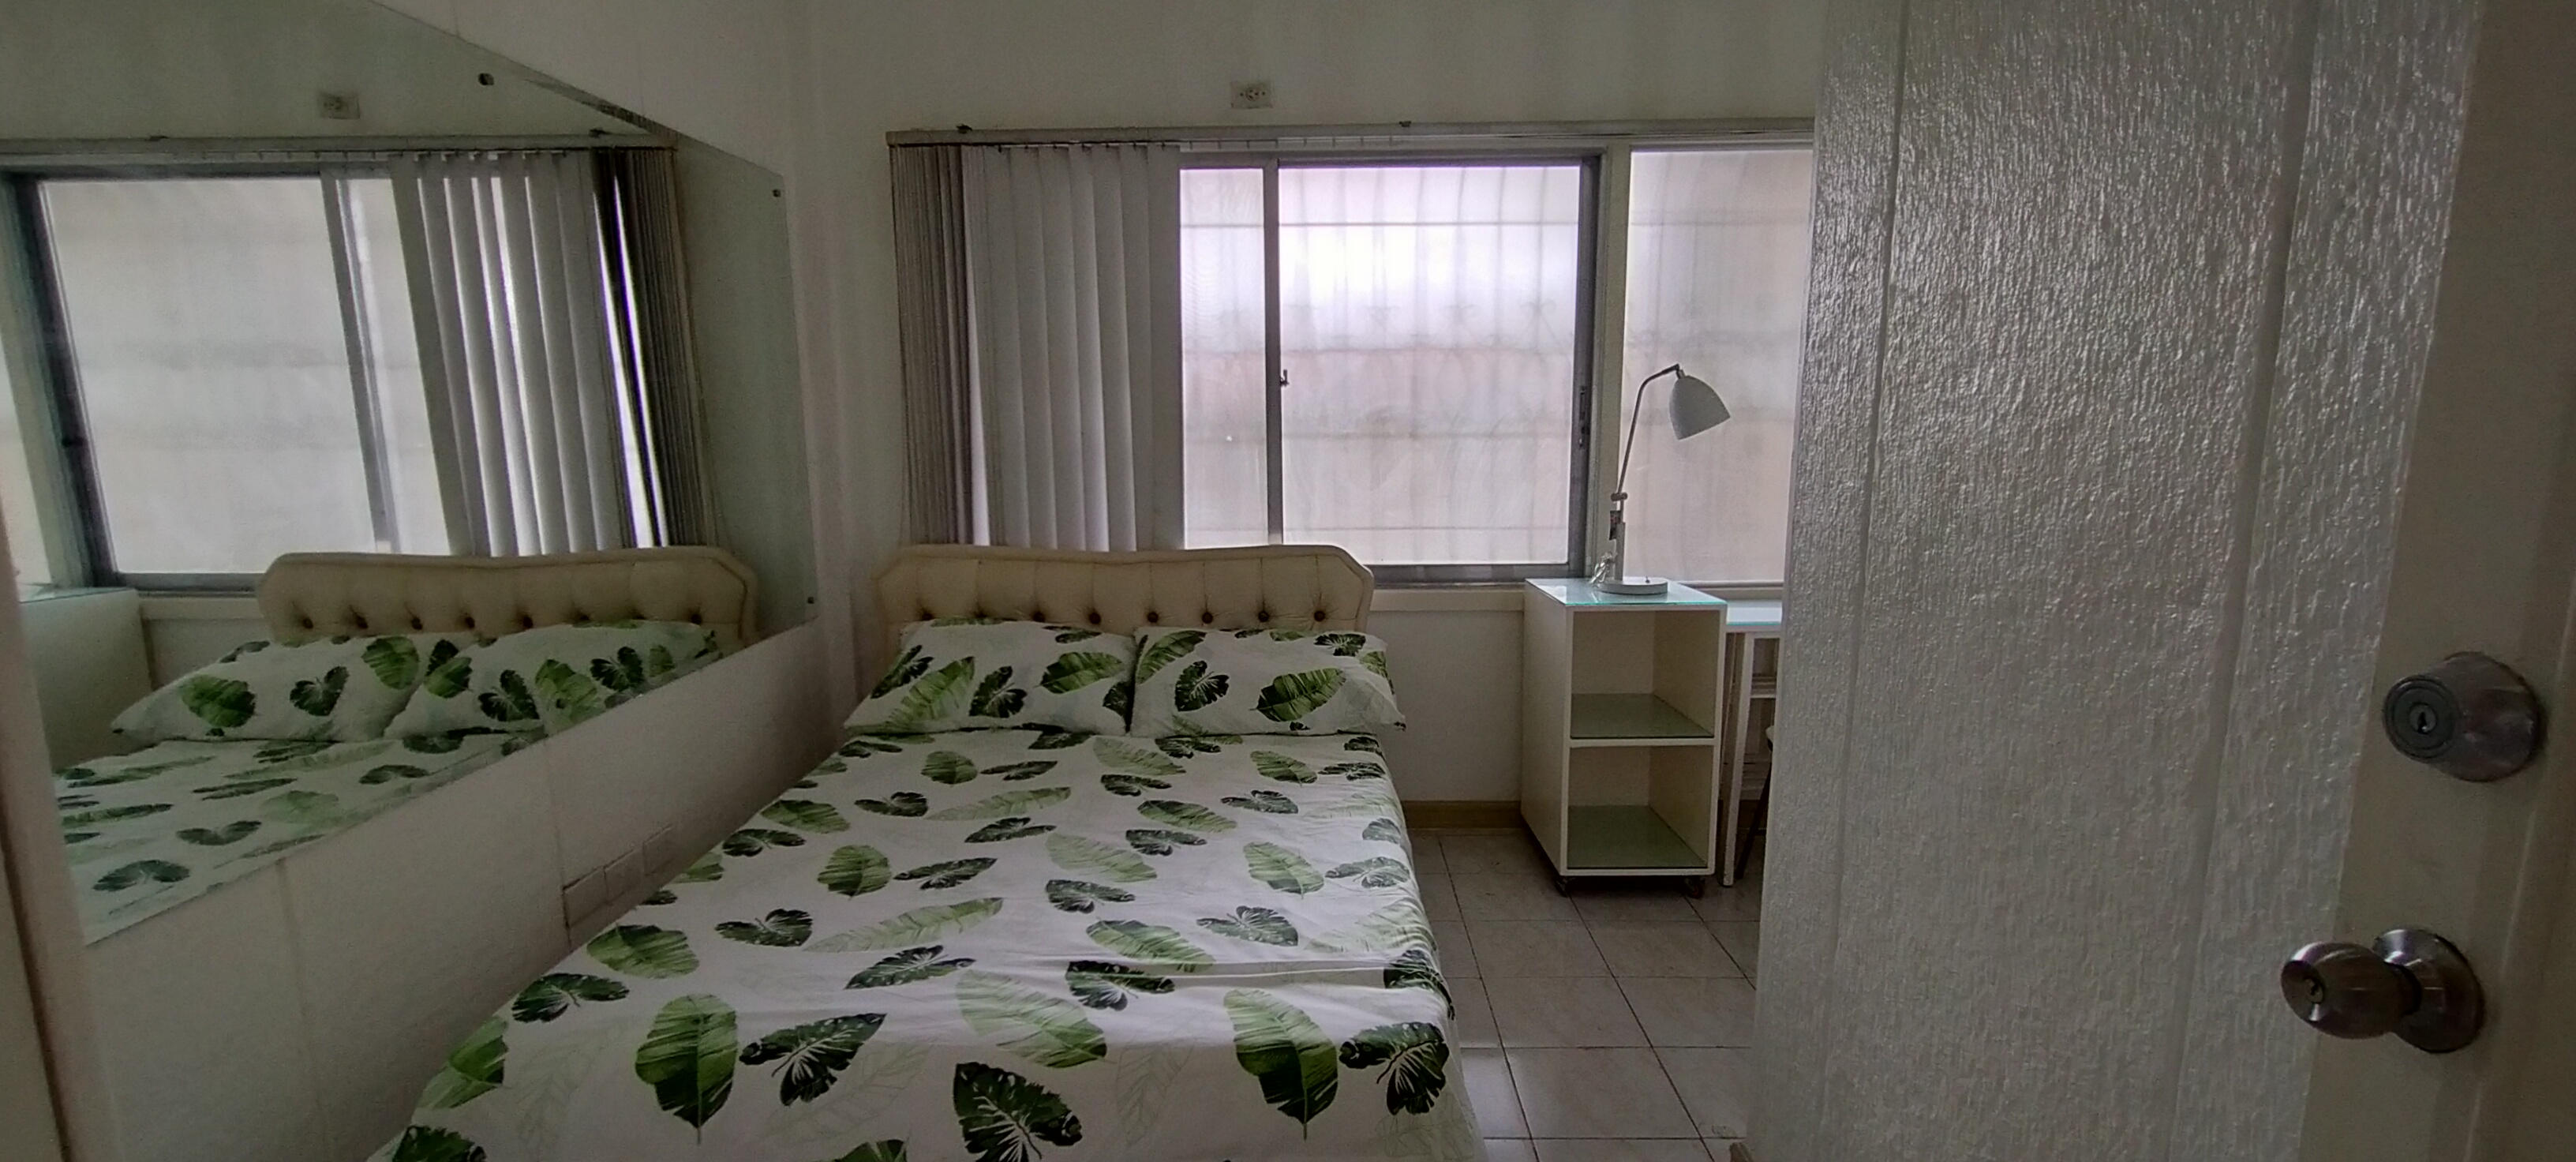 5-bedrooms-bungalow-house-located-in-banilad-cebu-city